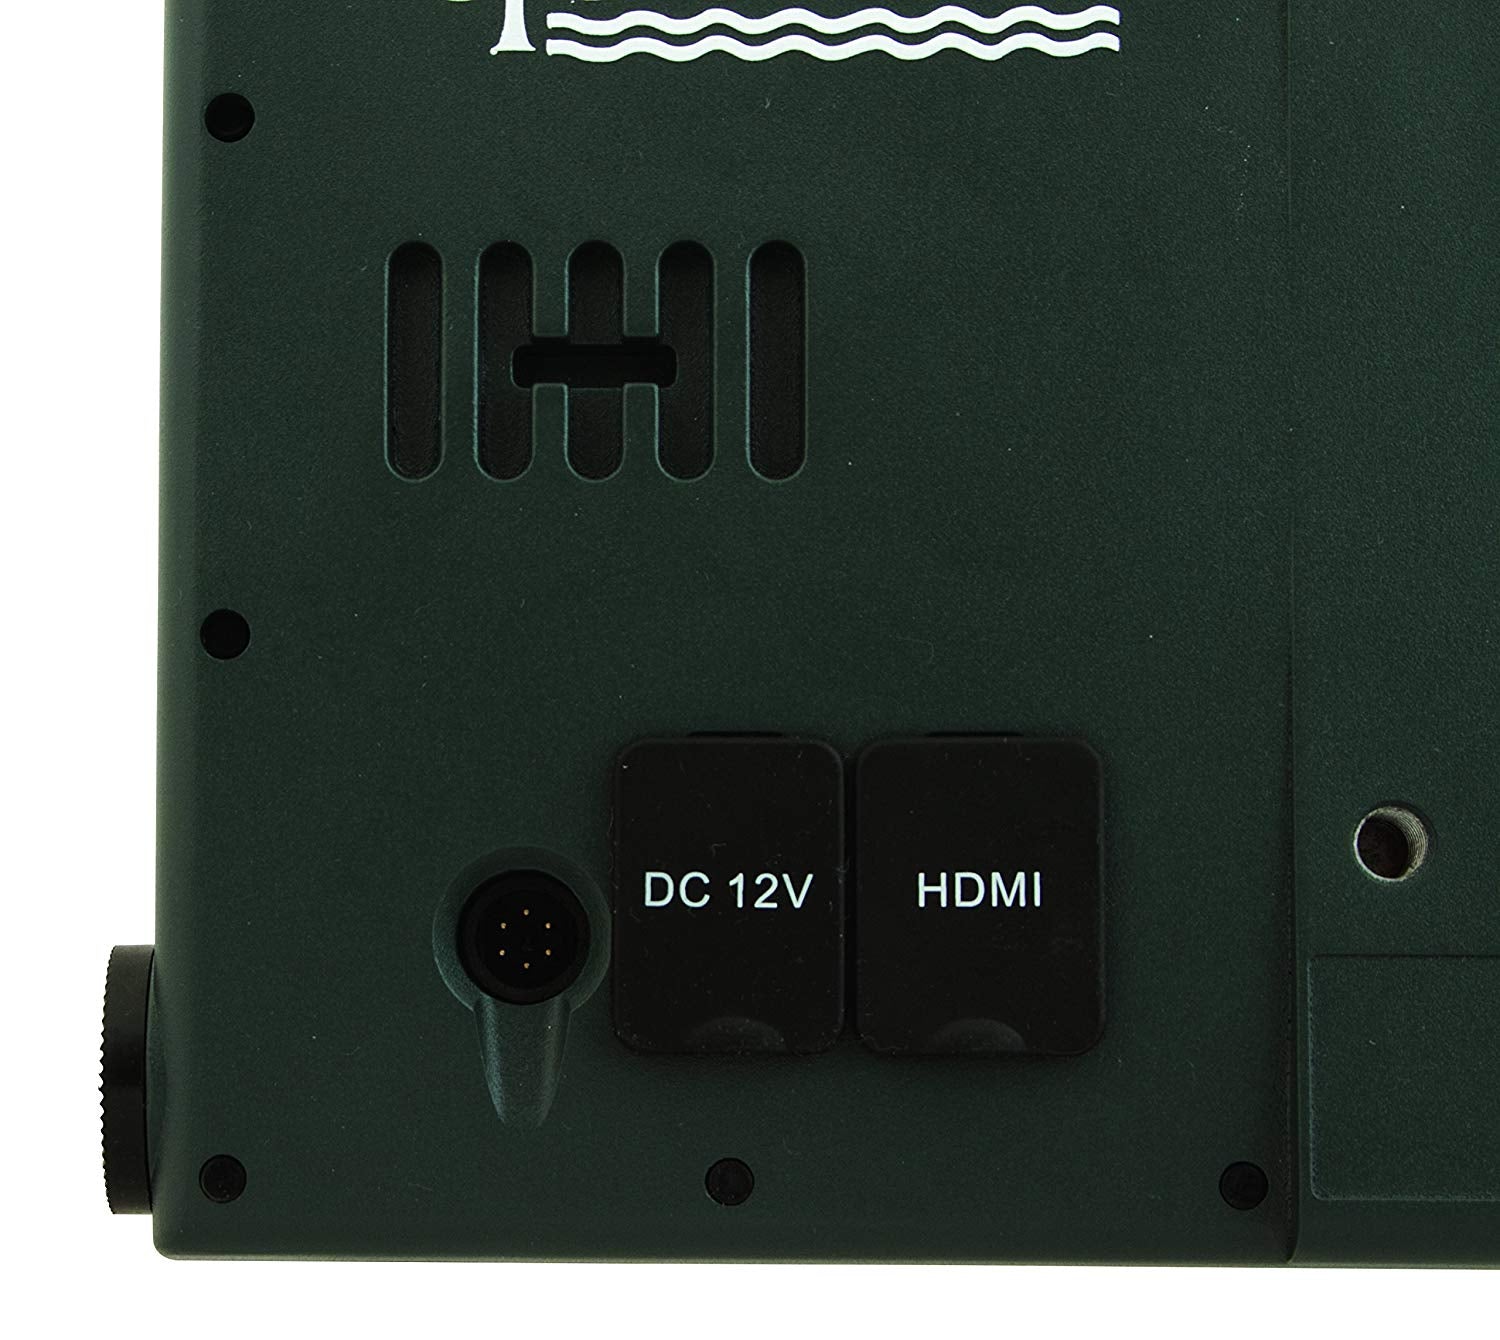 Aqua-Vu HD7i Pro Underwater Camera